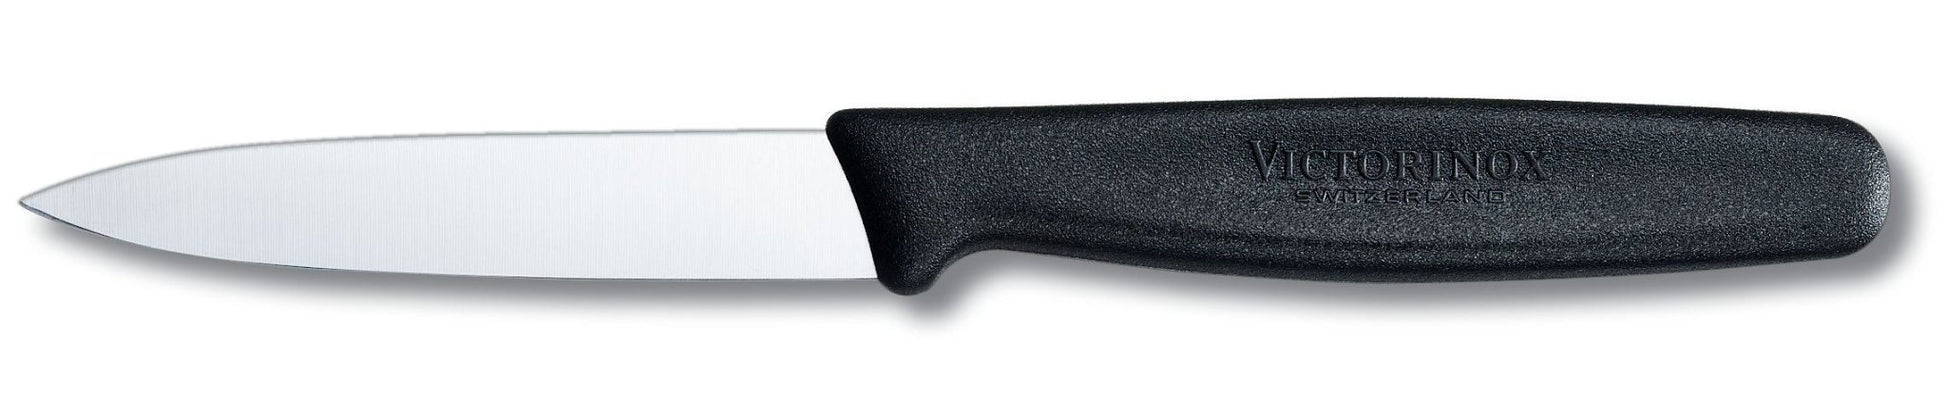 Victorinox Pointed Blade Paring Knife, 8 cm Blade Length, Black 5.0603